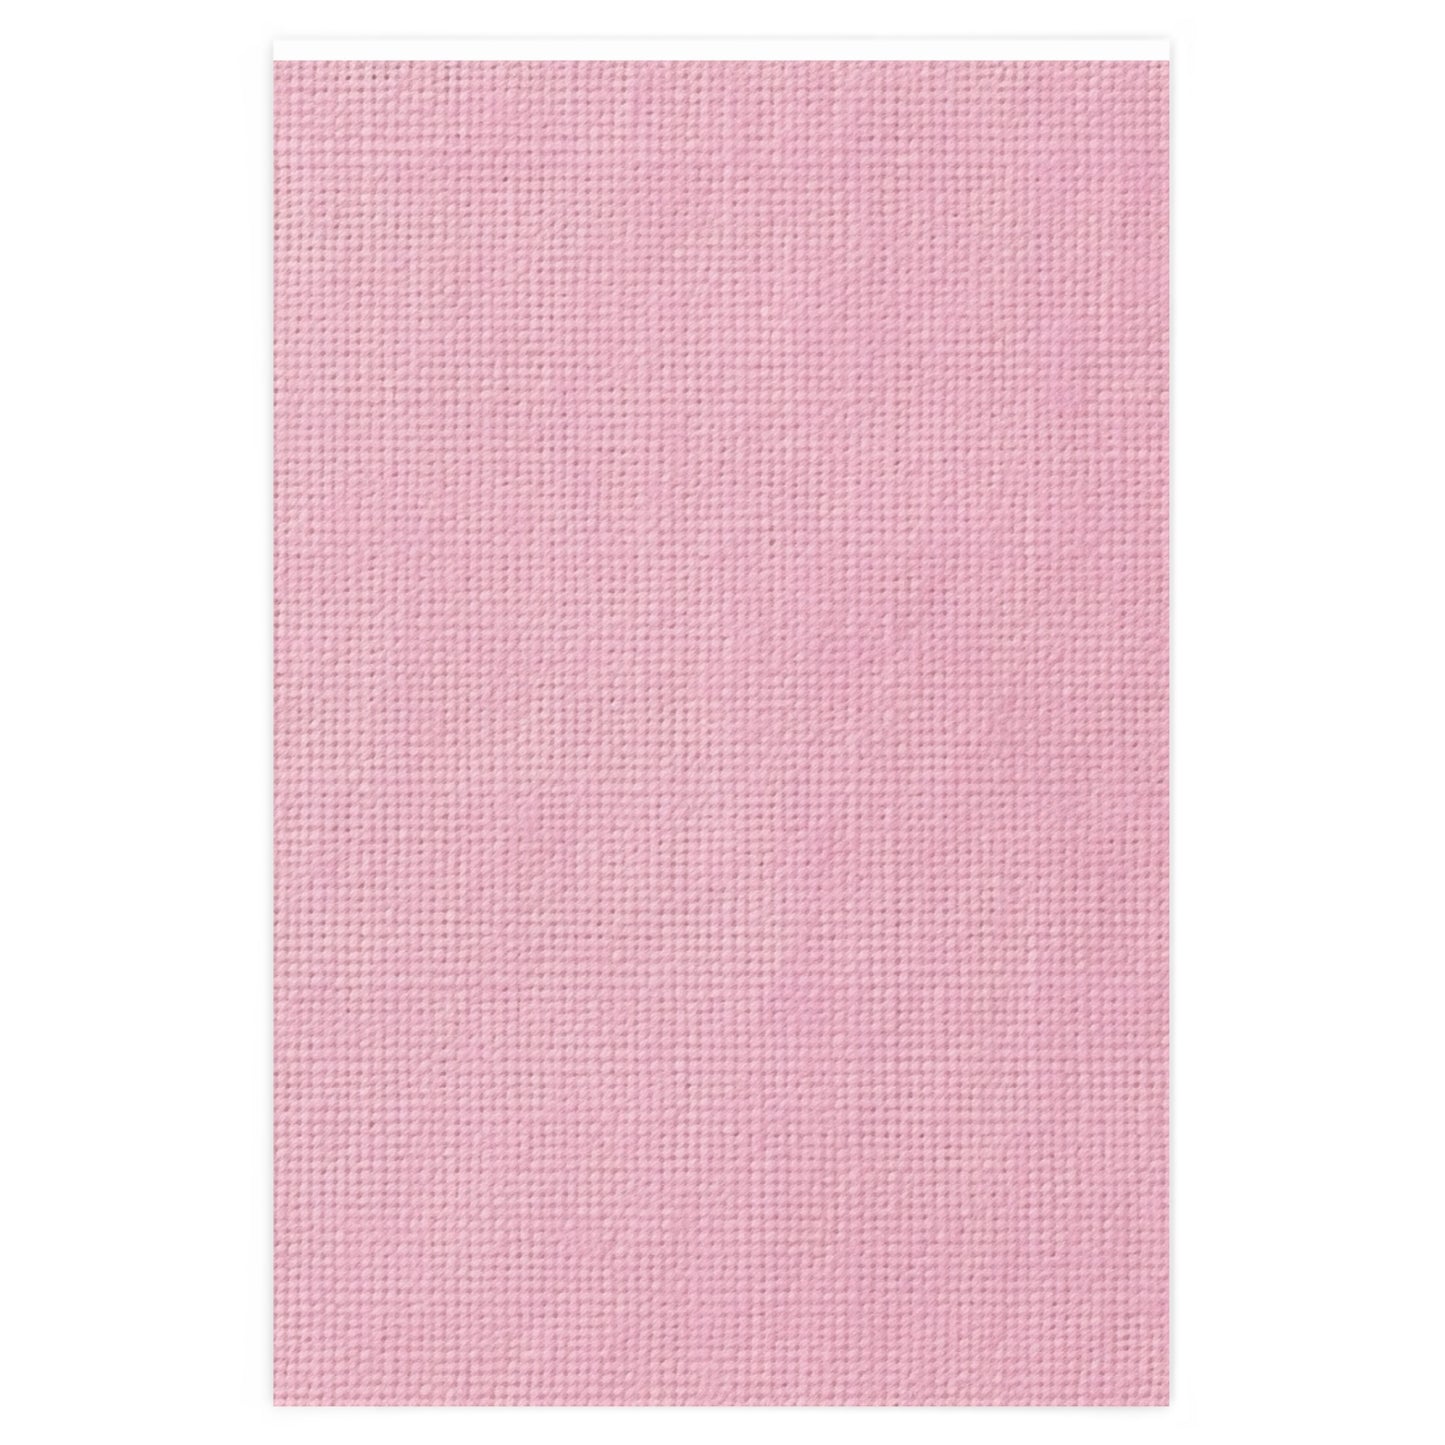 Blushing Garment Dye Pink: Denim-Inspired, Soft-Toned Fabric - Wrapping Paper